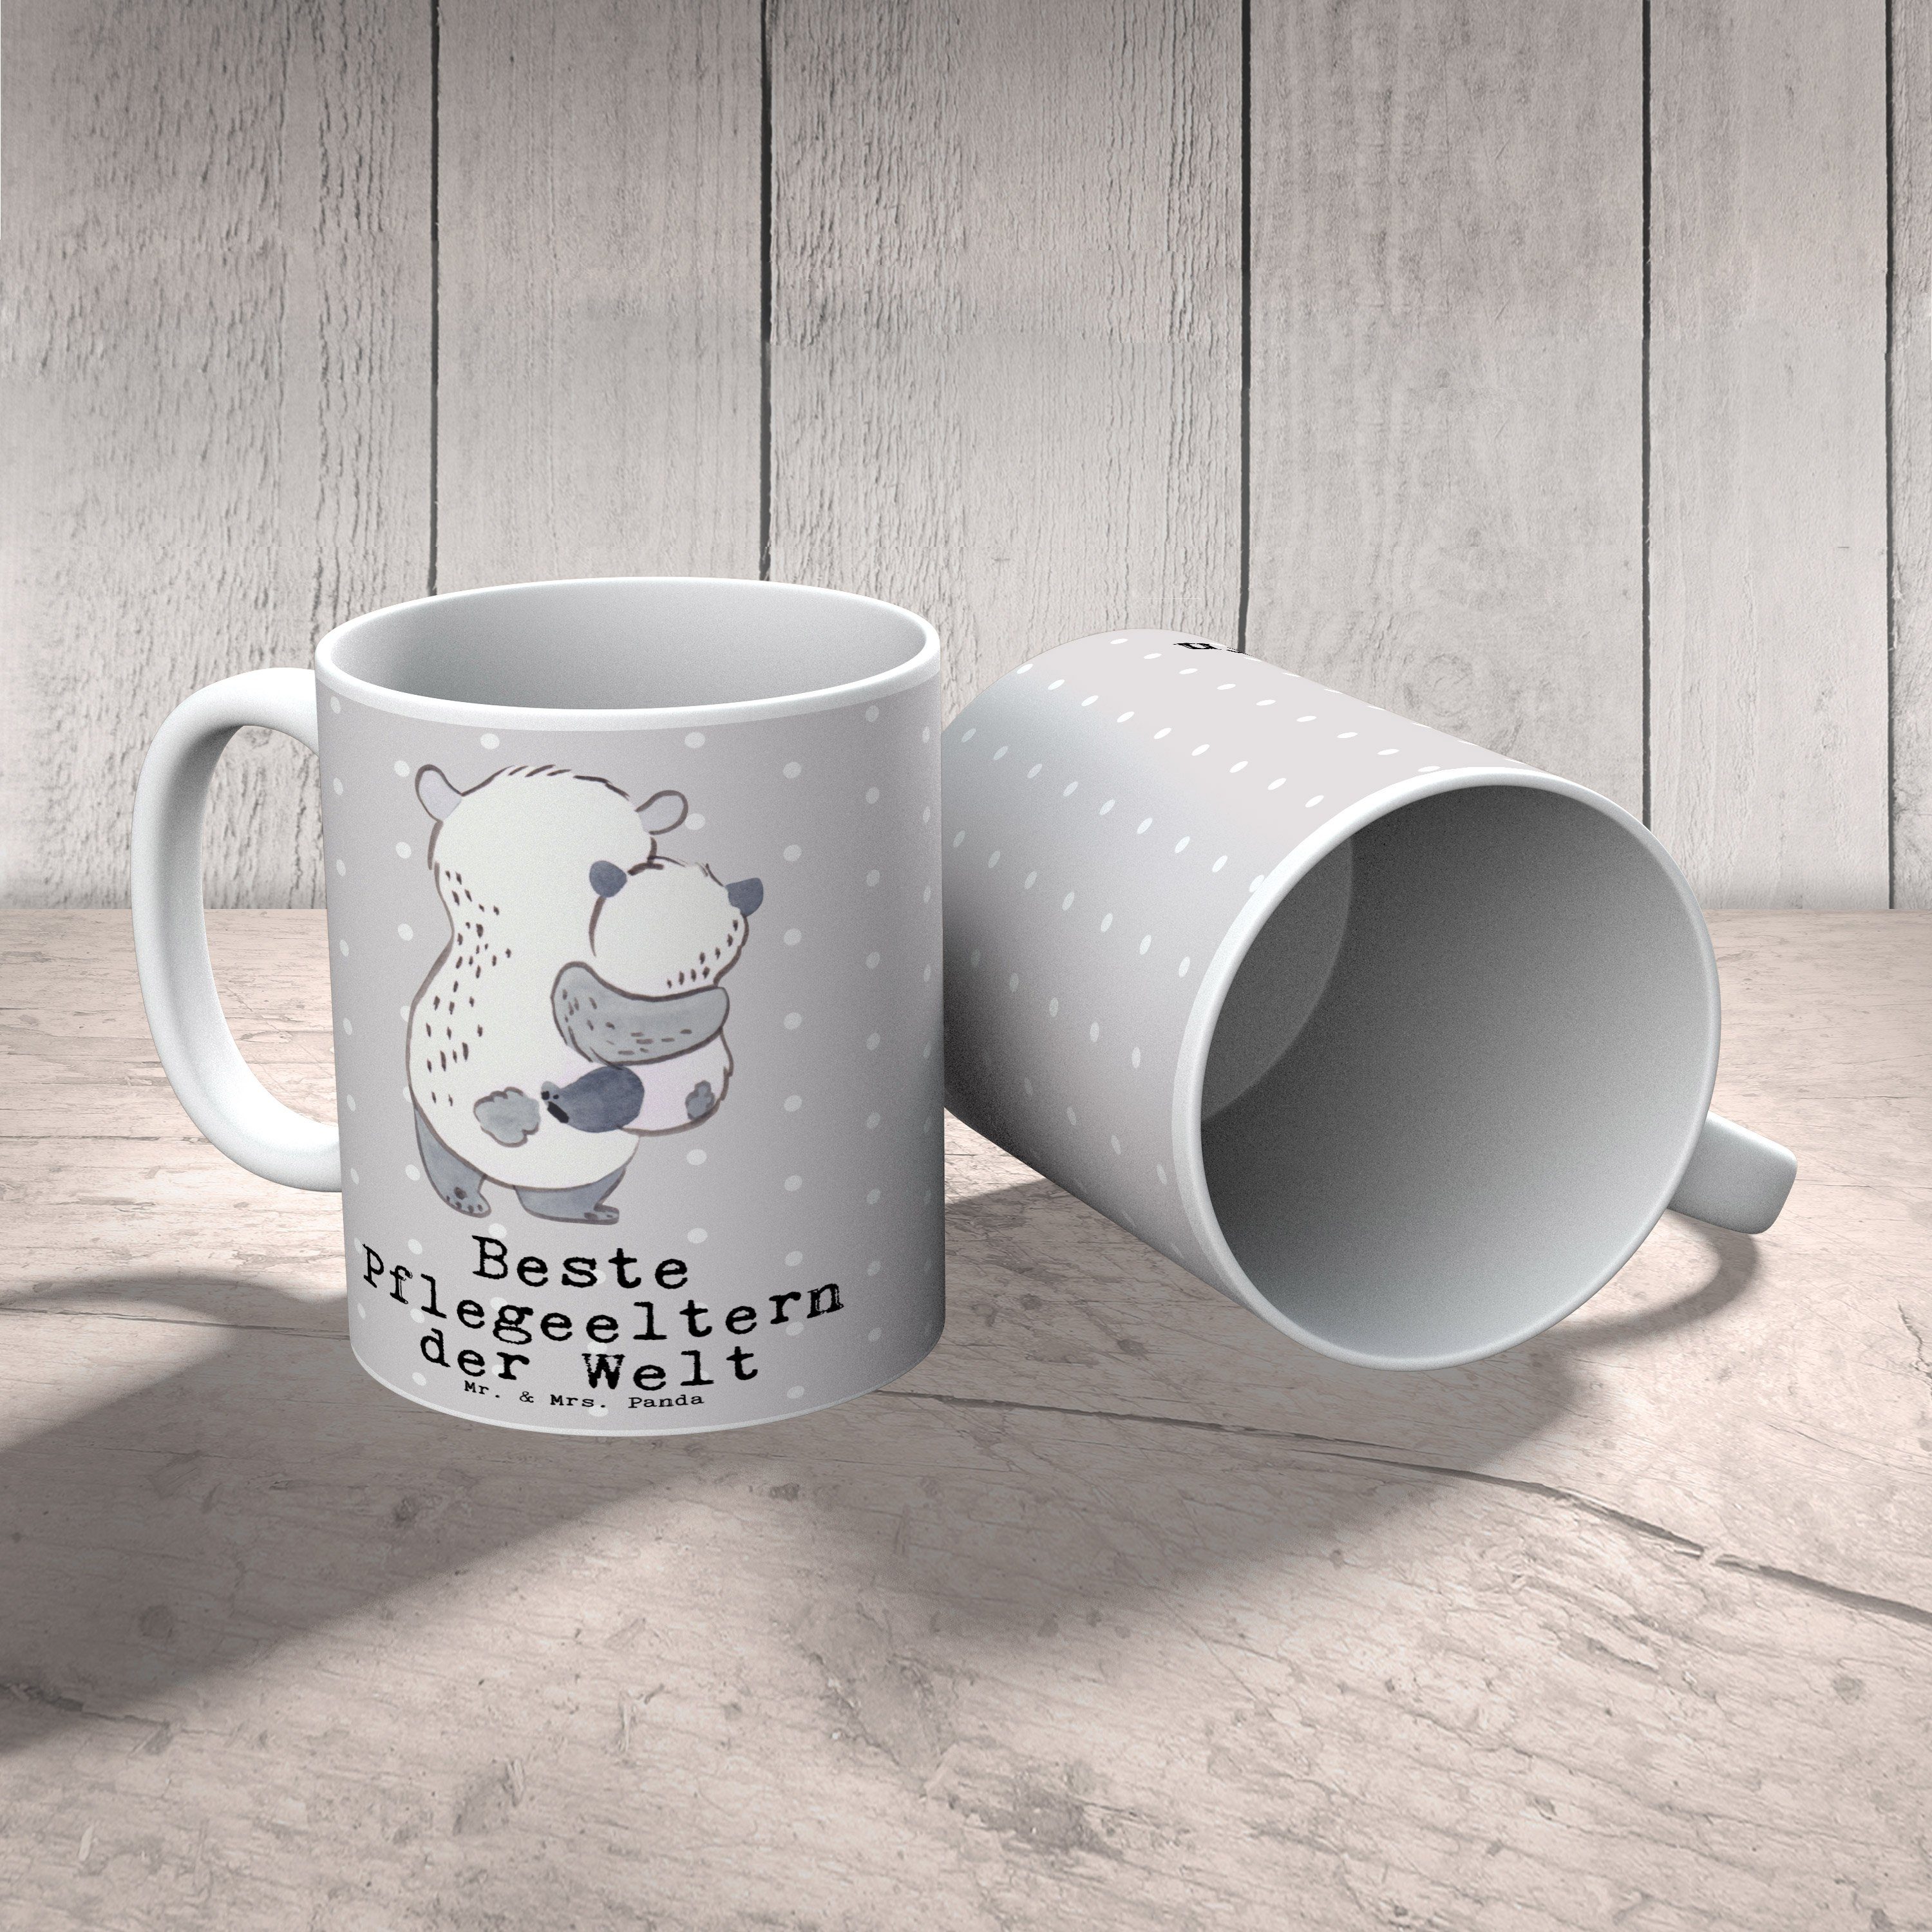 - Tasse - Sp, Pflegeeltern Grau Panda Geschenk, Keramik Tasse Mr. der & Mrs. Welt Panda Pastell Beste